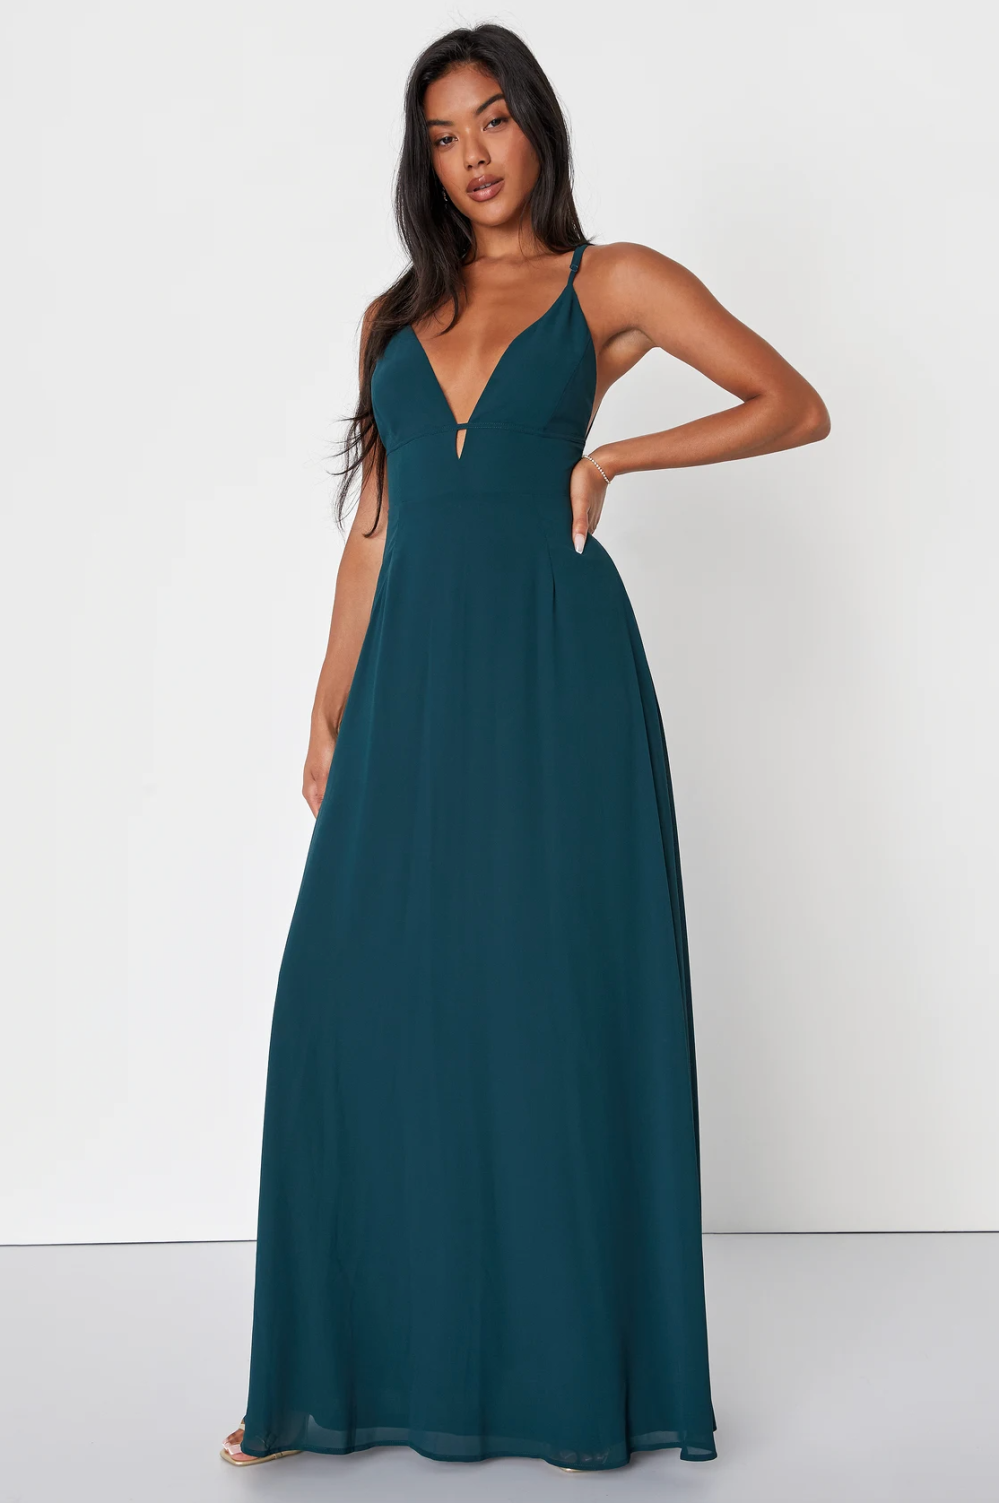 Lulus Irresistible Elegance Emerald Green Strappy Backless Maxi Dress